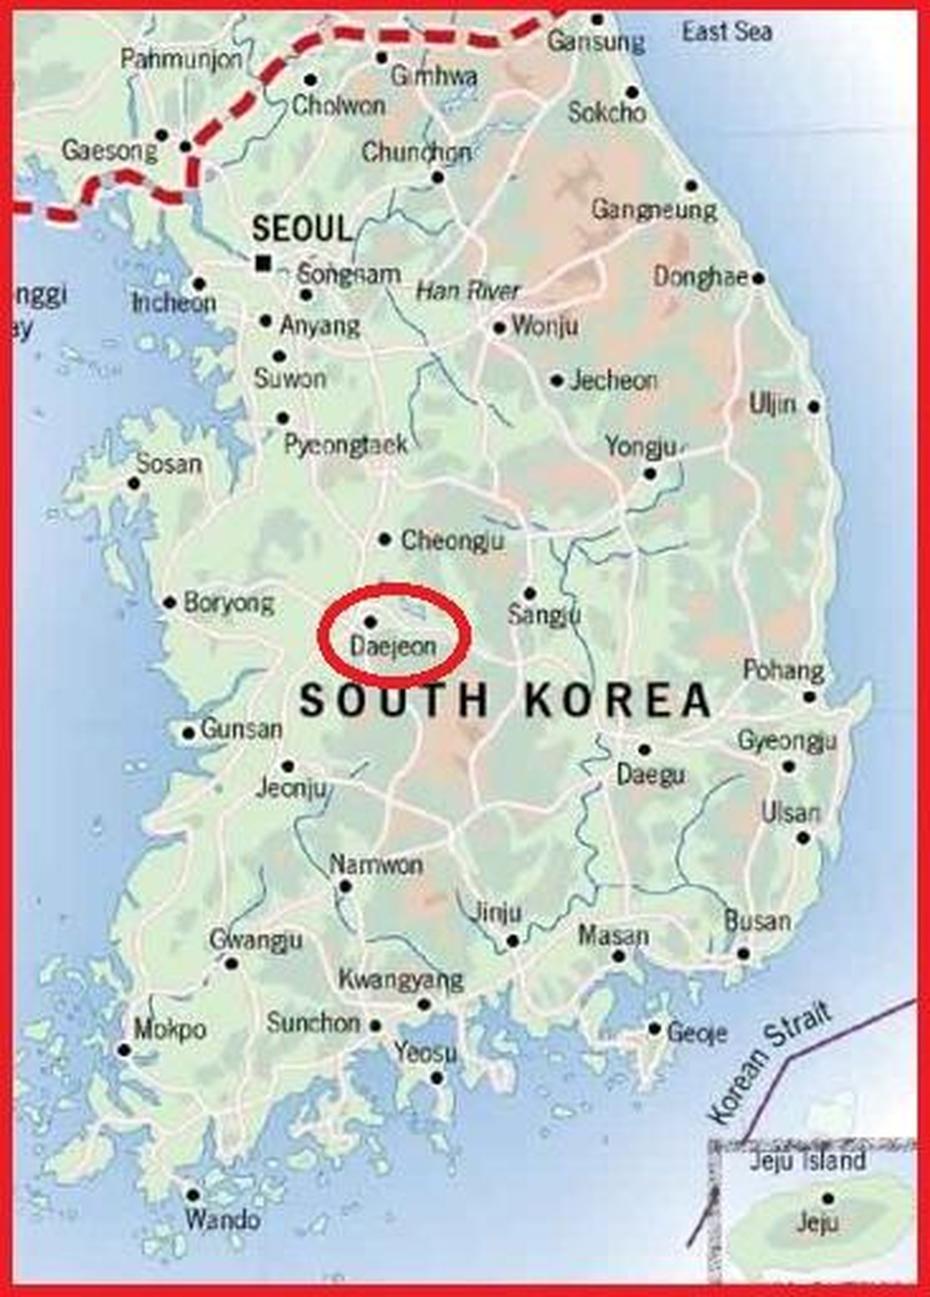 Suwon, Daegu South Korea, March, Daejeon, South Korea